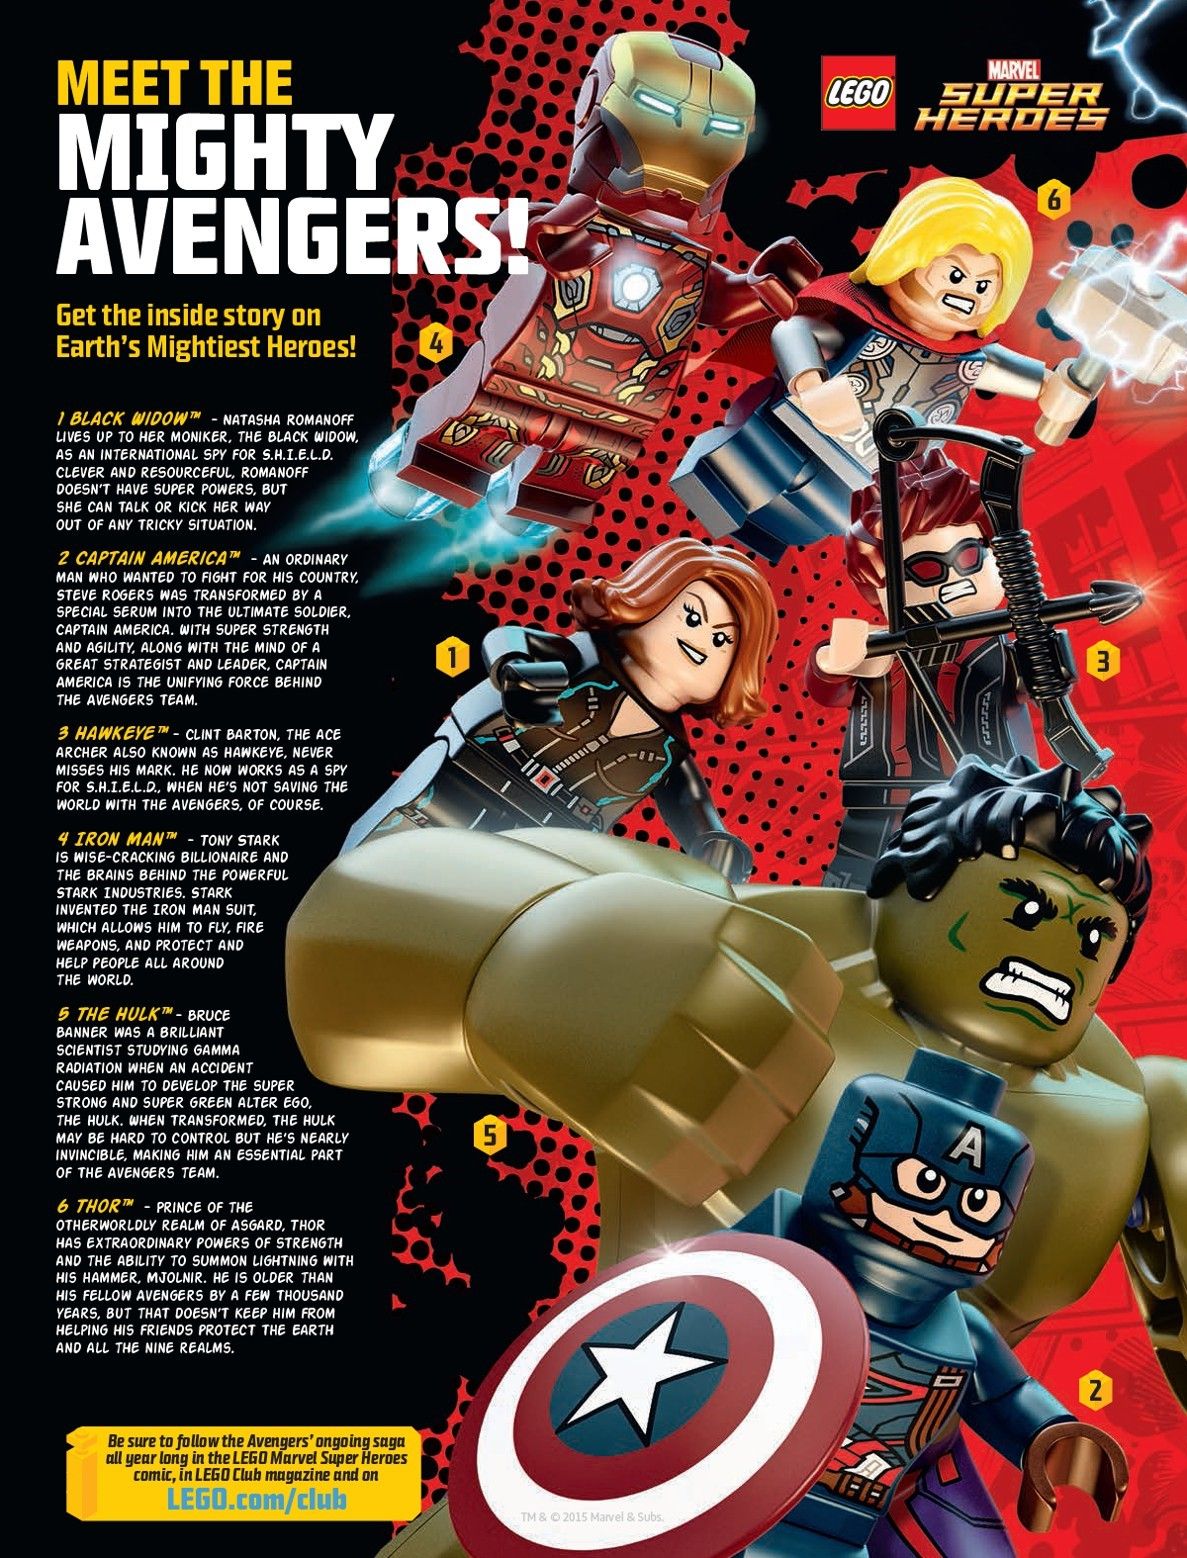 Avengers: Age of Ultron Lego Comic Book 1